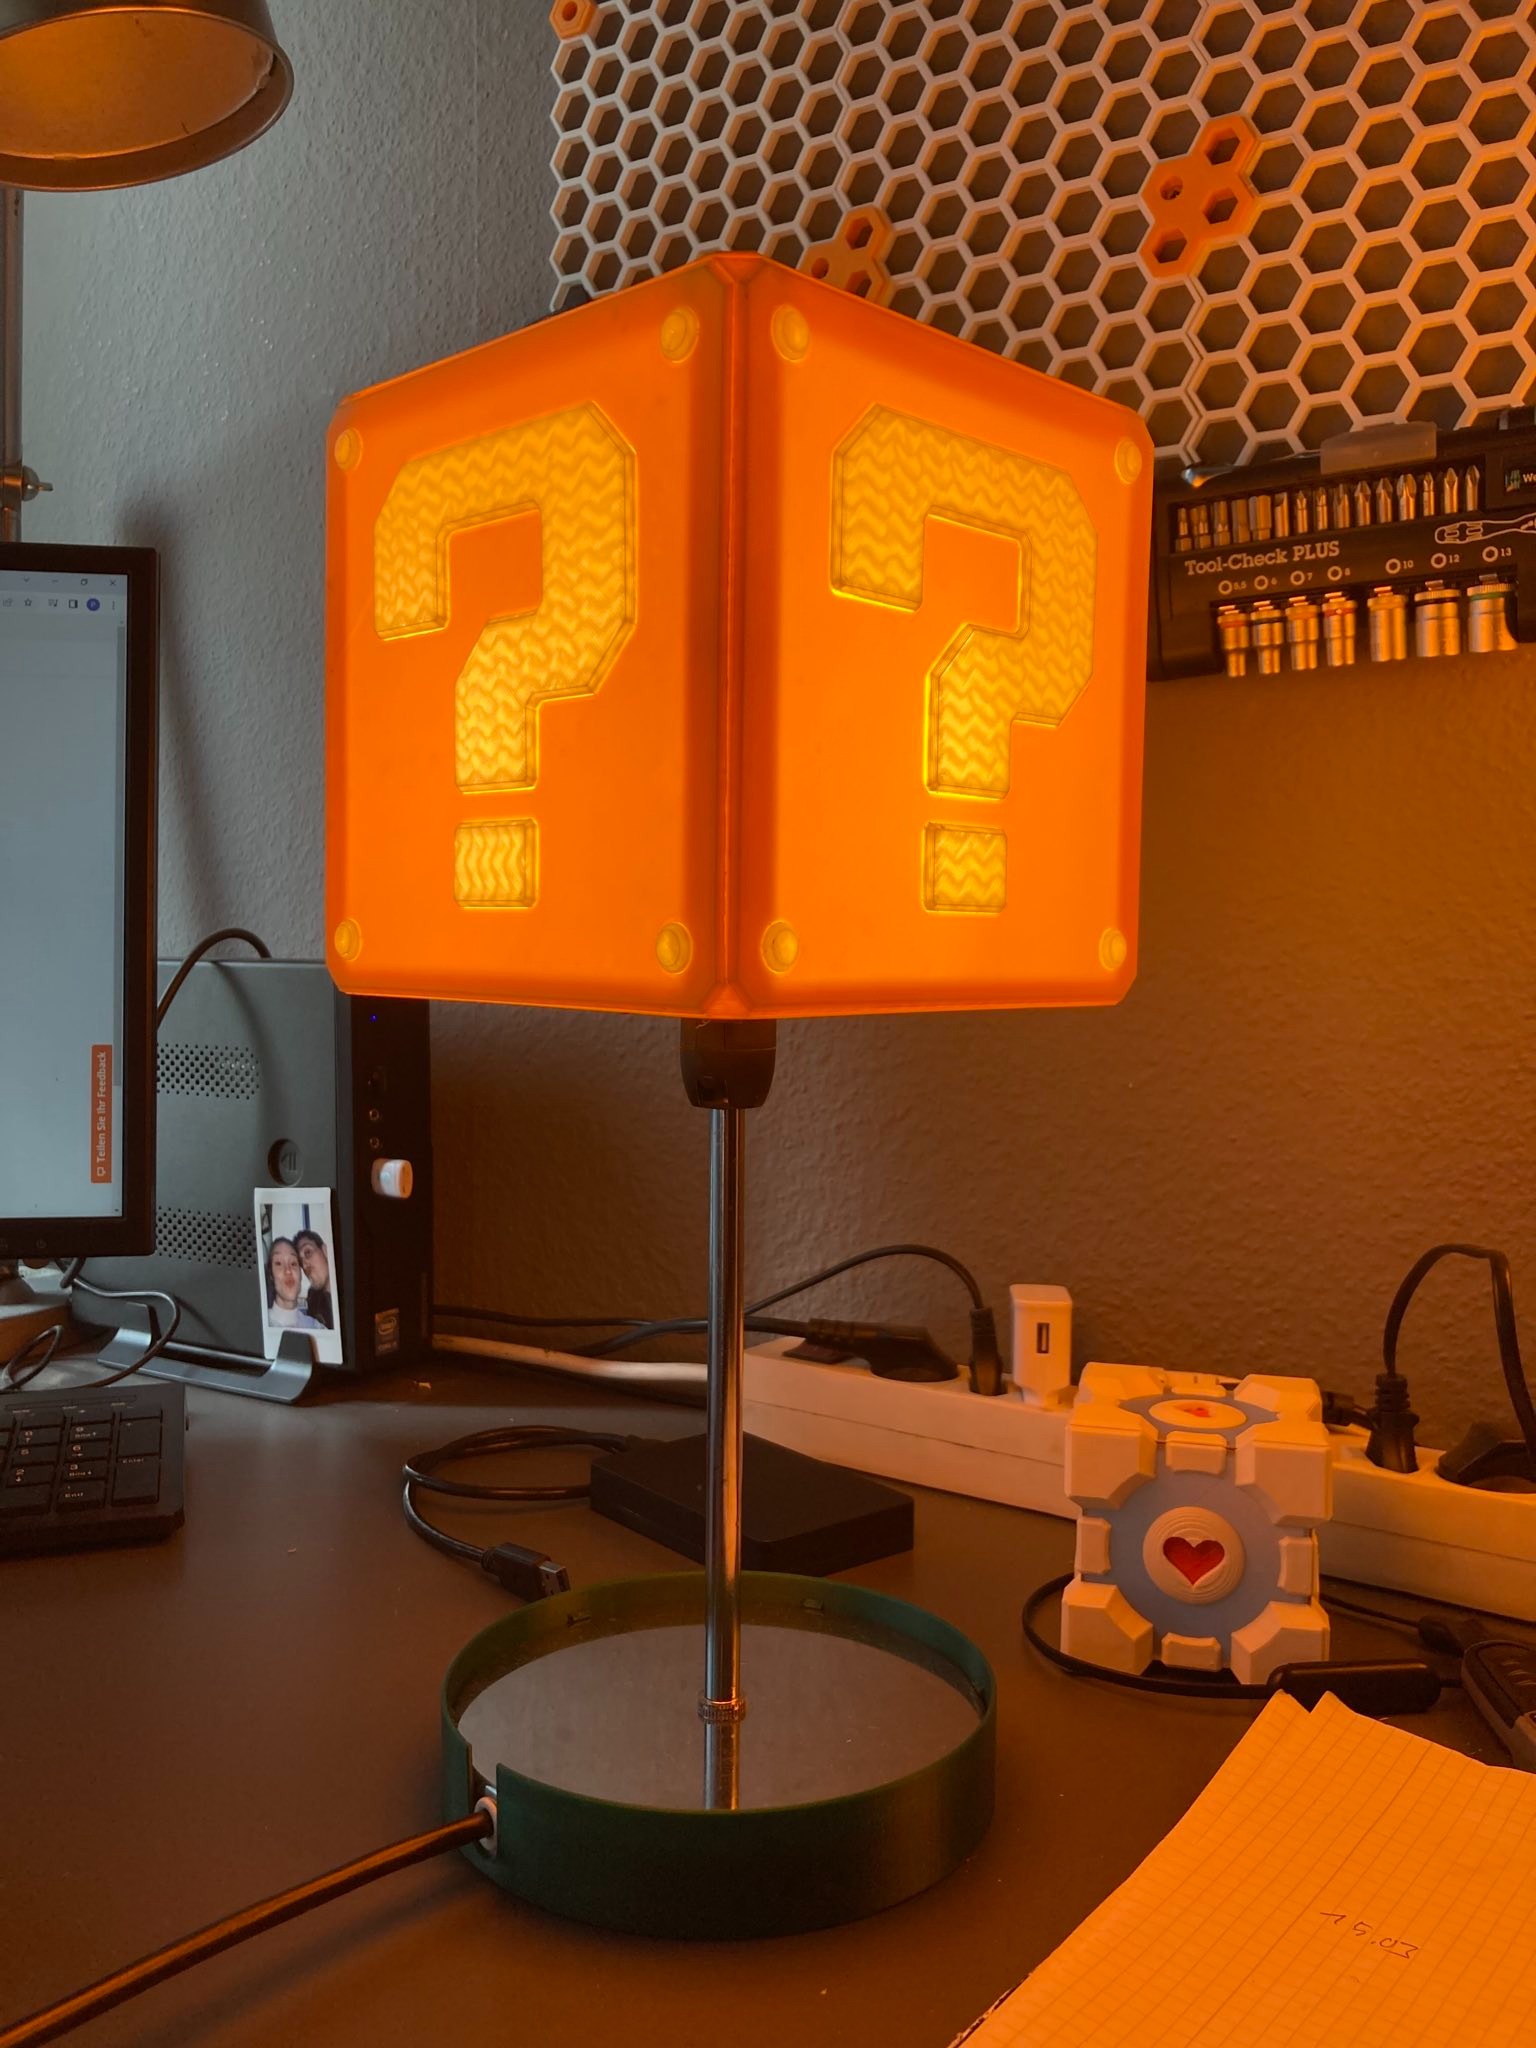 Super Mario questionmark block lamp